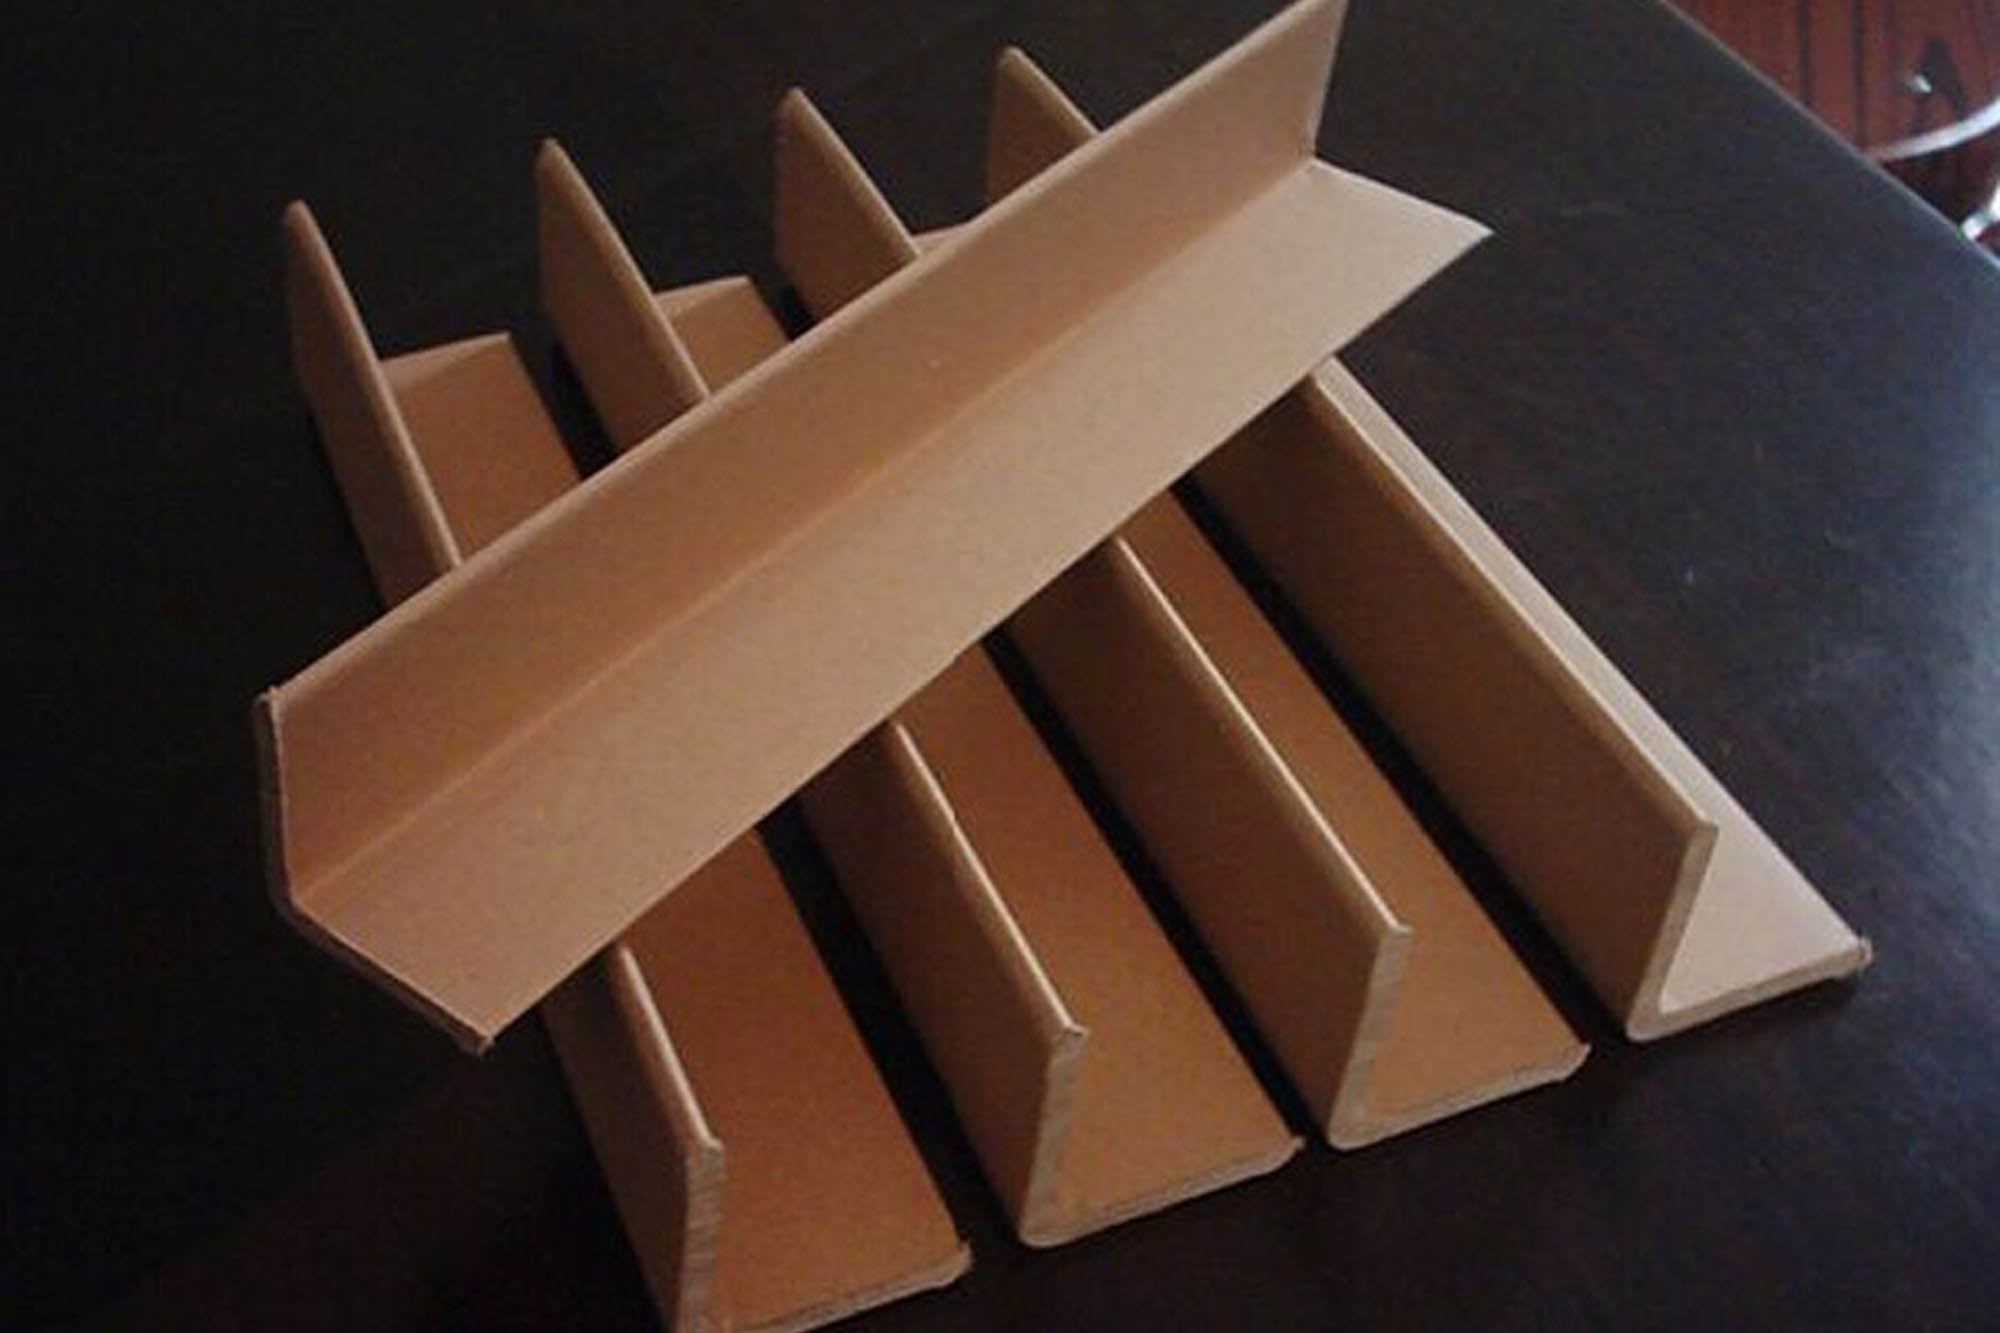 Cardboard edge protectors